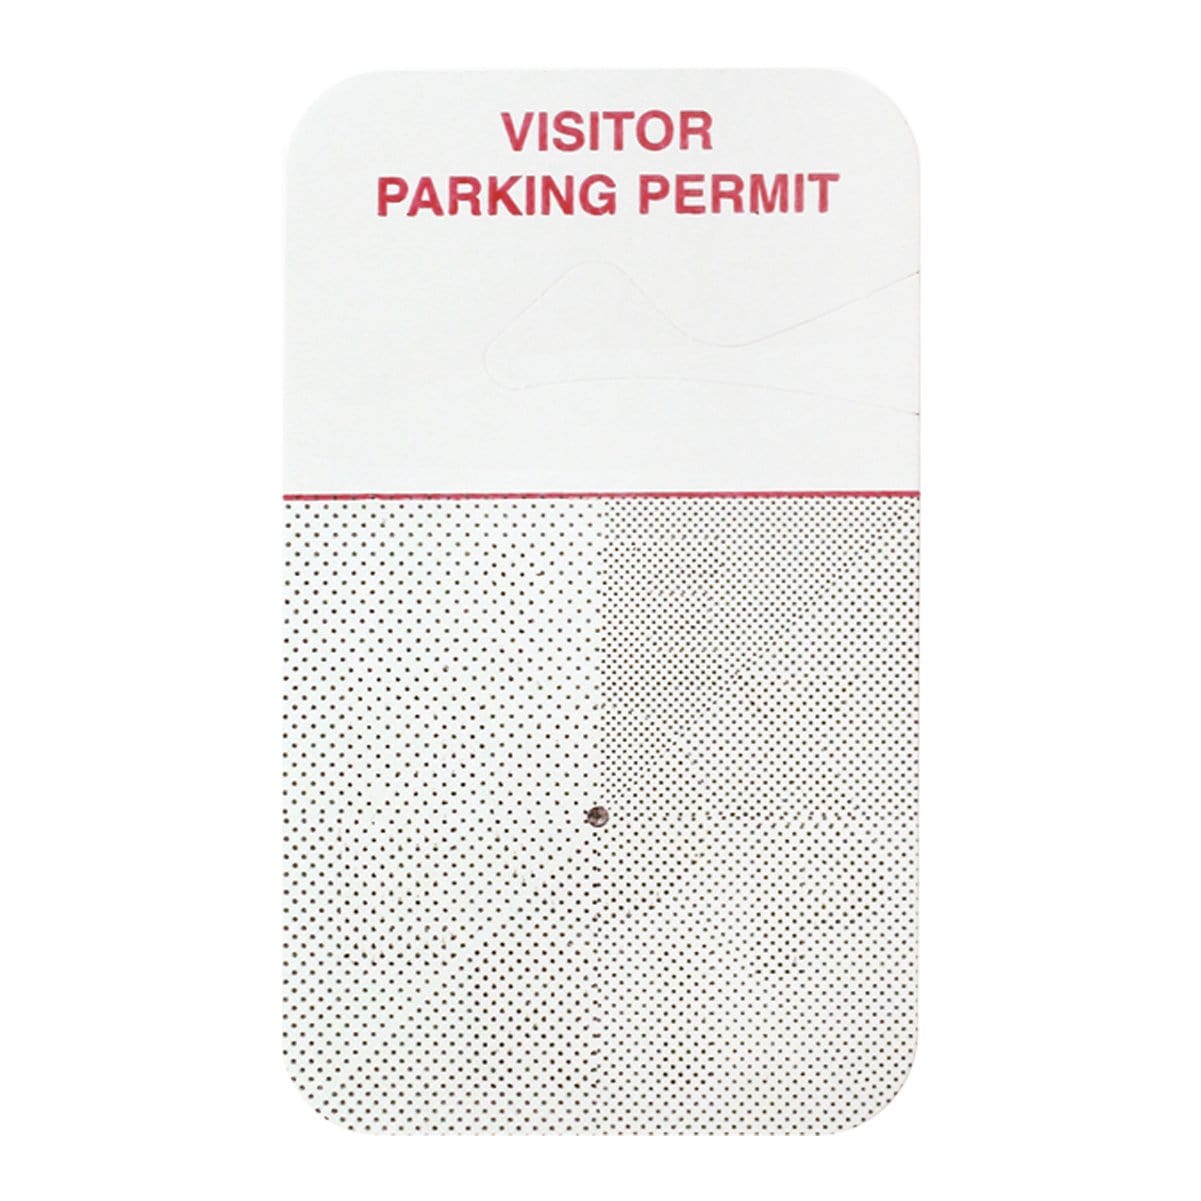 Temporary Expiring Hangtag "VISITOR PARKING PERMIT", Box of 500 (P/N 05139) 05139